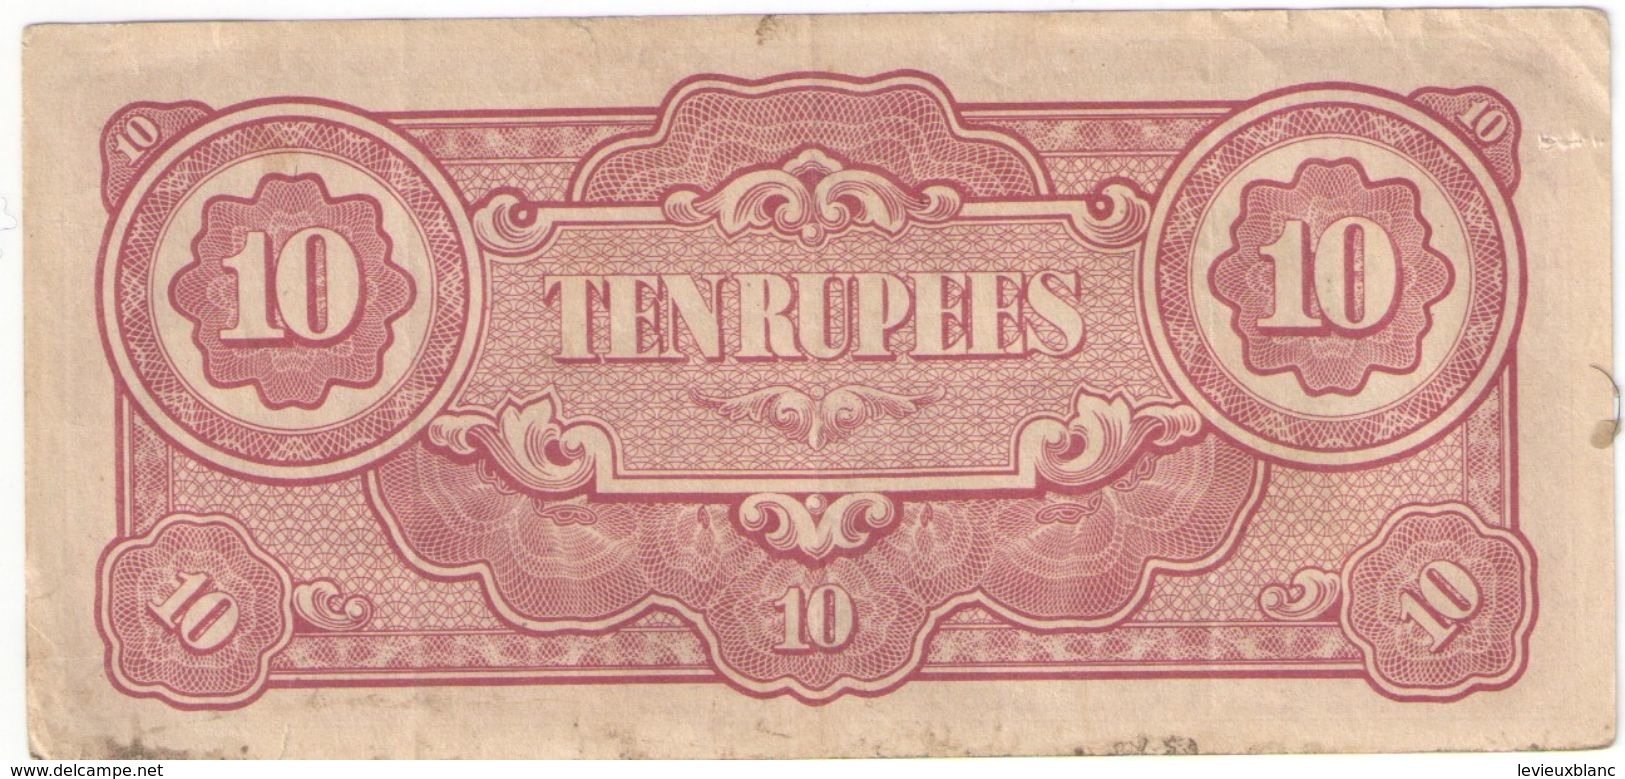 Ten Rupees/ The Japanese Government/Birmanie Occupation Japonaise/Vers 1940-42                  BILL184bis - Japón